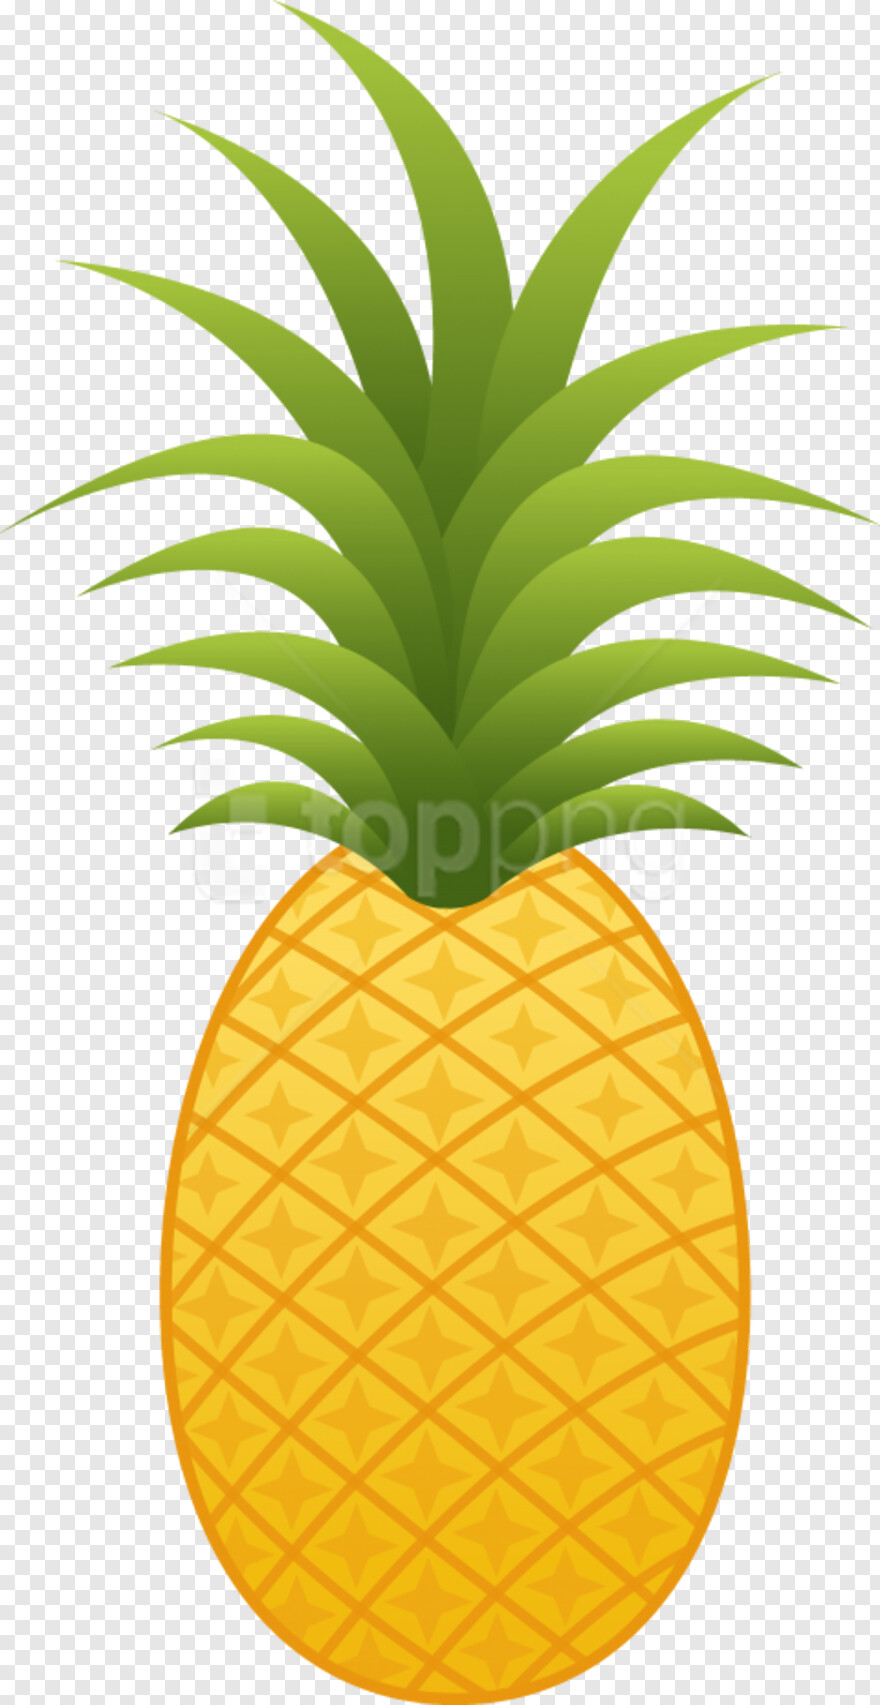 pineapple # 654183